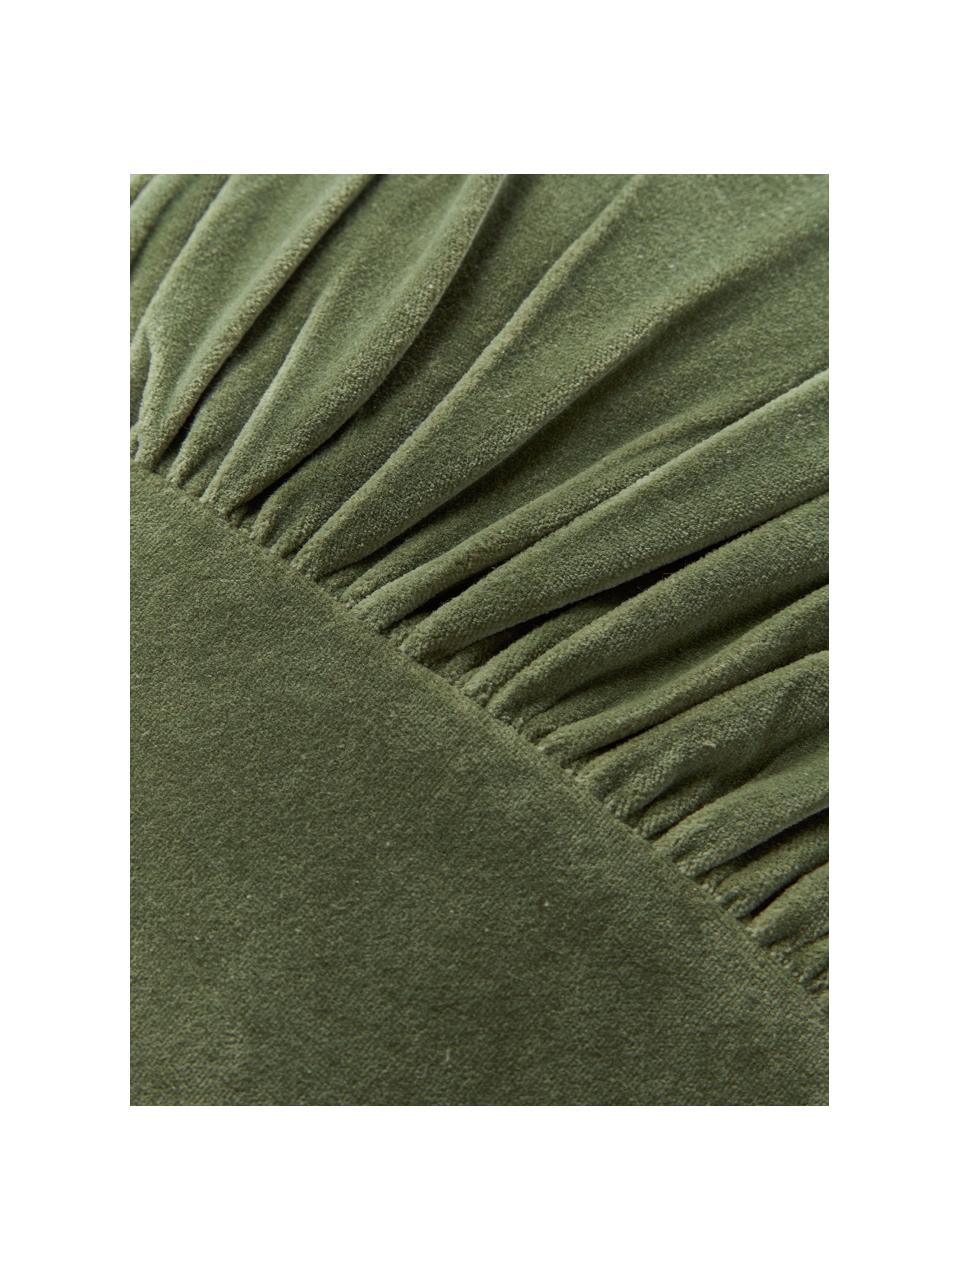 Gerafftes Samt-Kissen Vada, Hülle: 100 % Baumwollsamt, Olivgrün, B 50 x L 50 cm